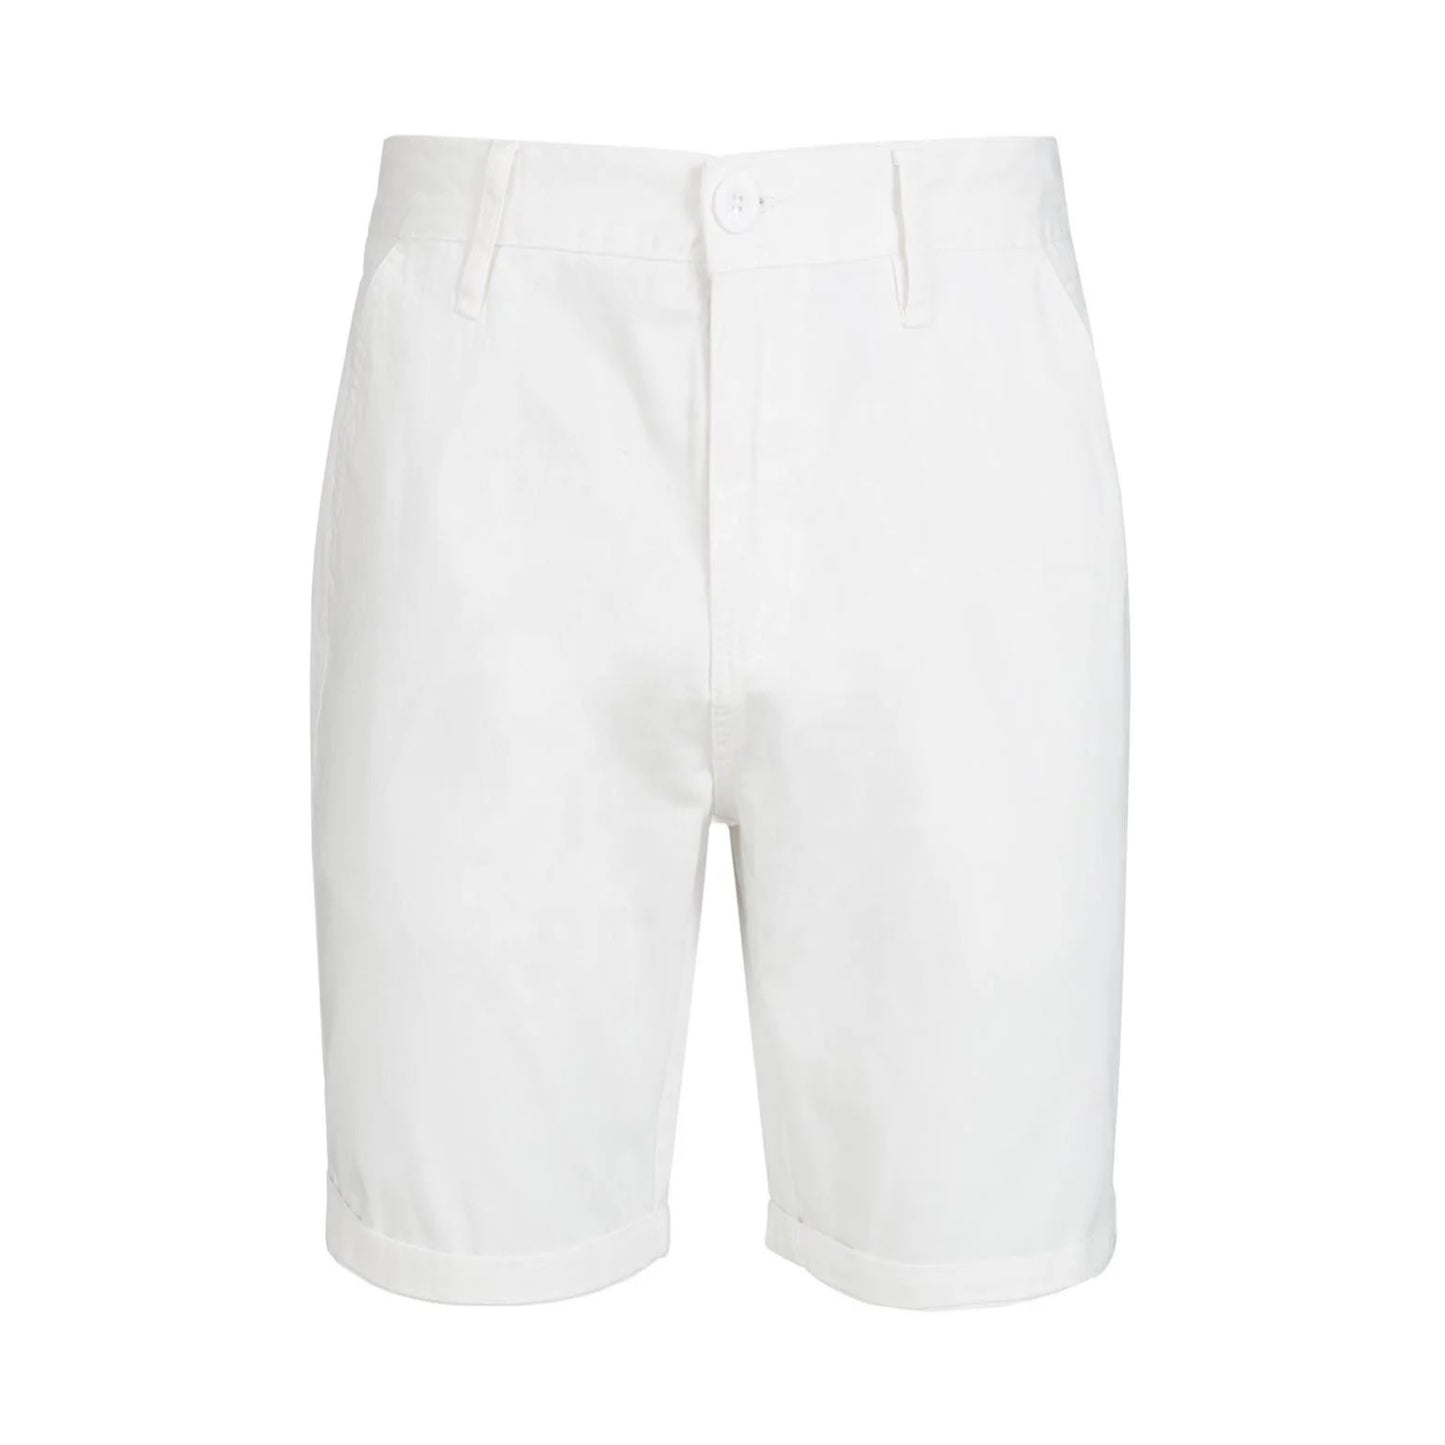 SALE! 2H #1607 White Chinos Cotton Shorts